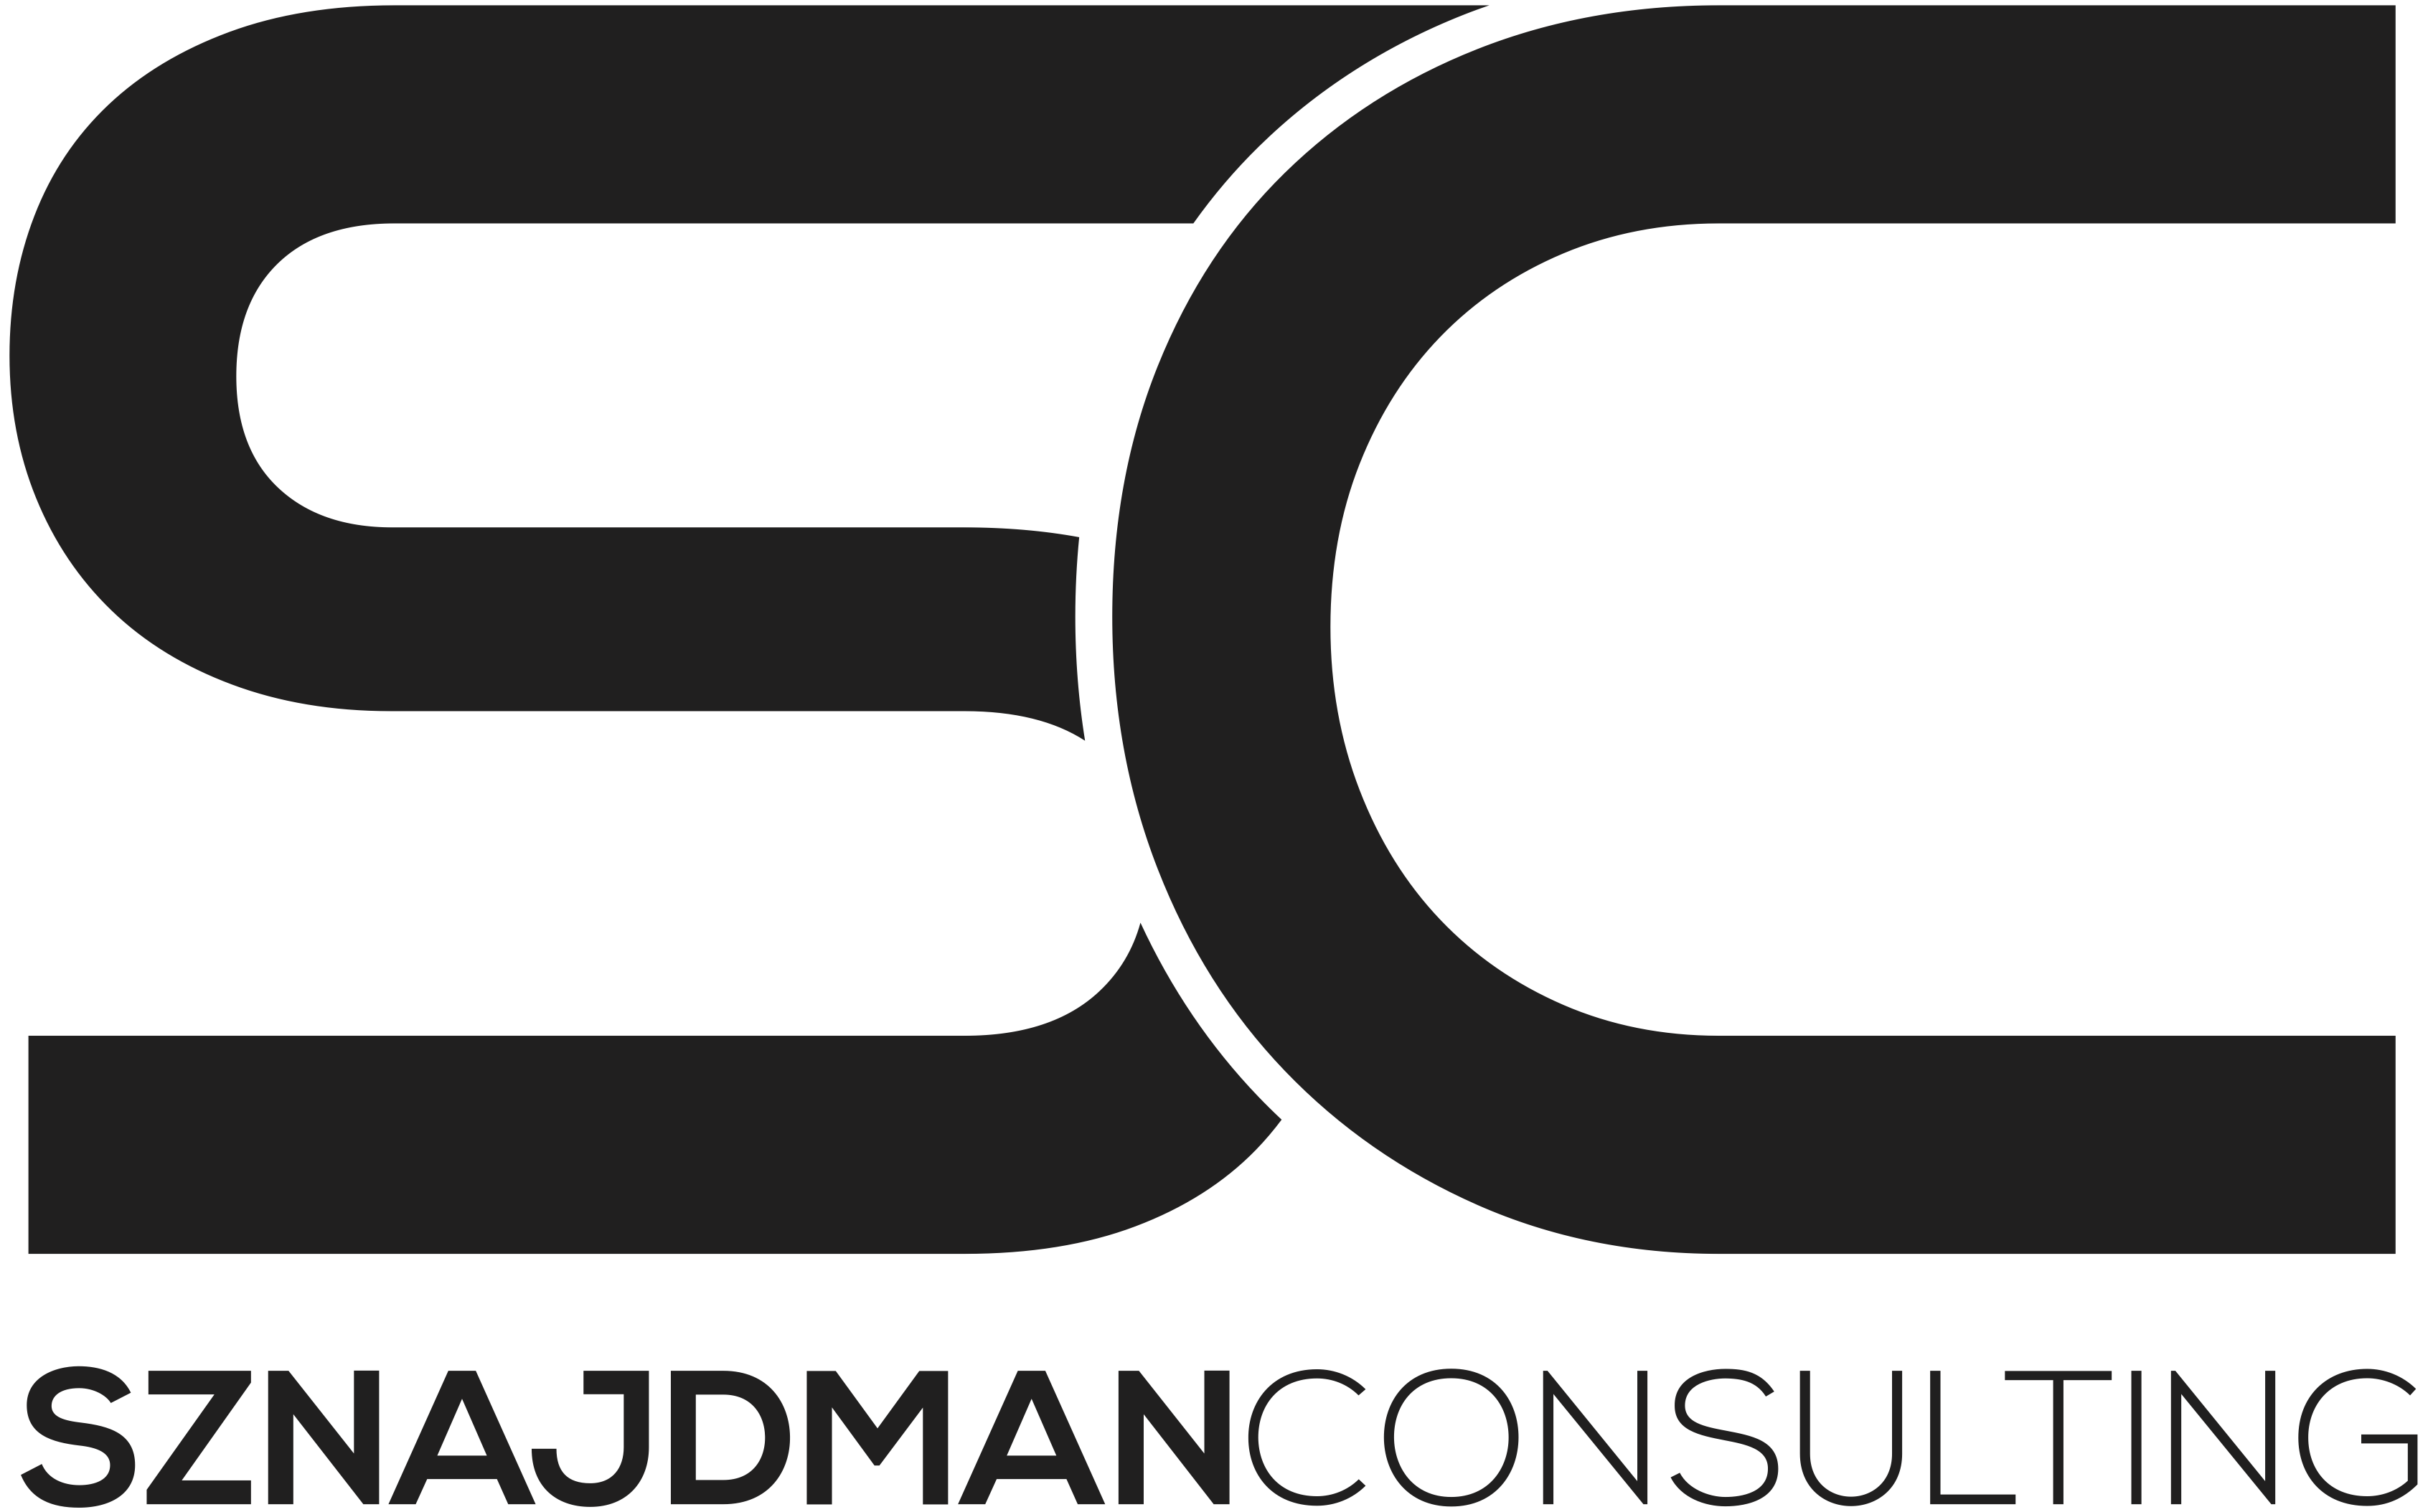 sznajdman consulting logo